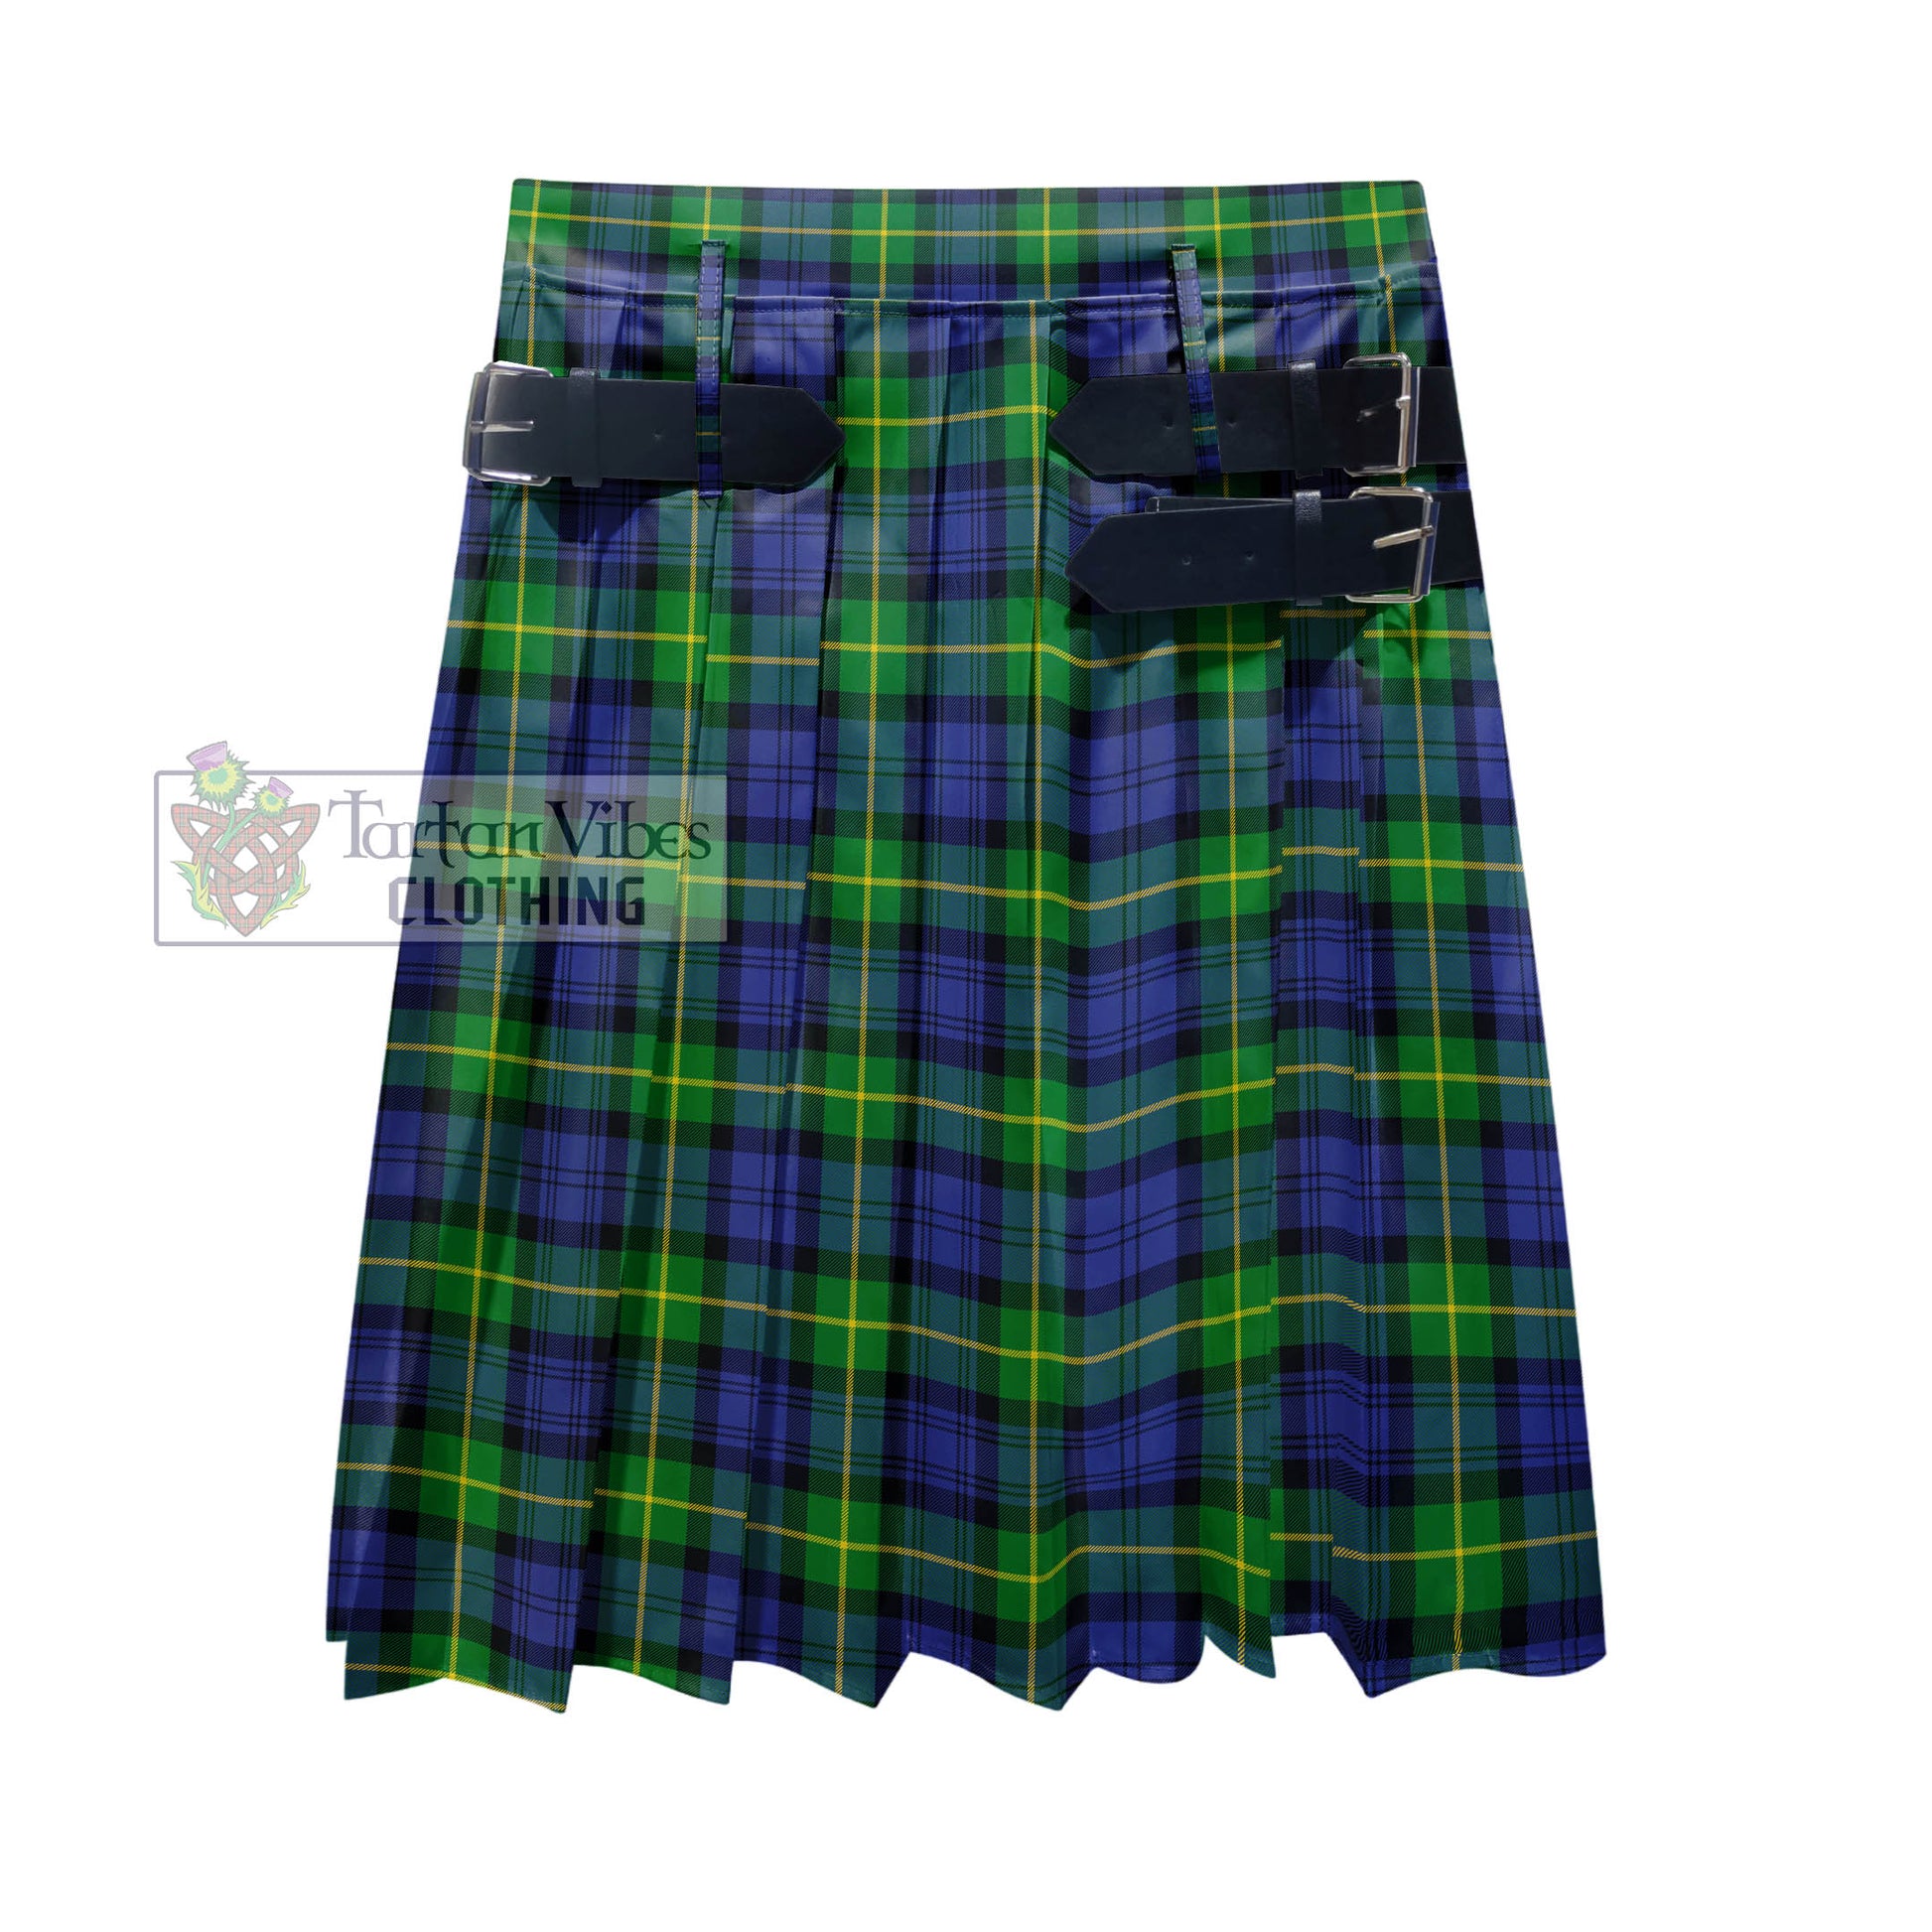 Tartan Vibes Clothing Meldrum Tartan Men's Pleated Skirt - Fashion Casual Retro Scottish Style